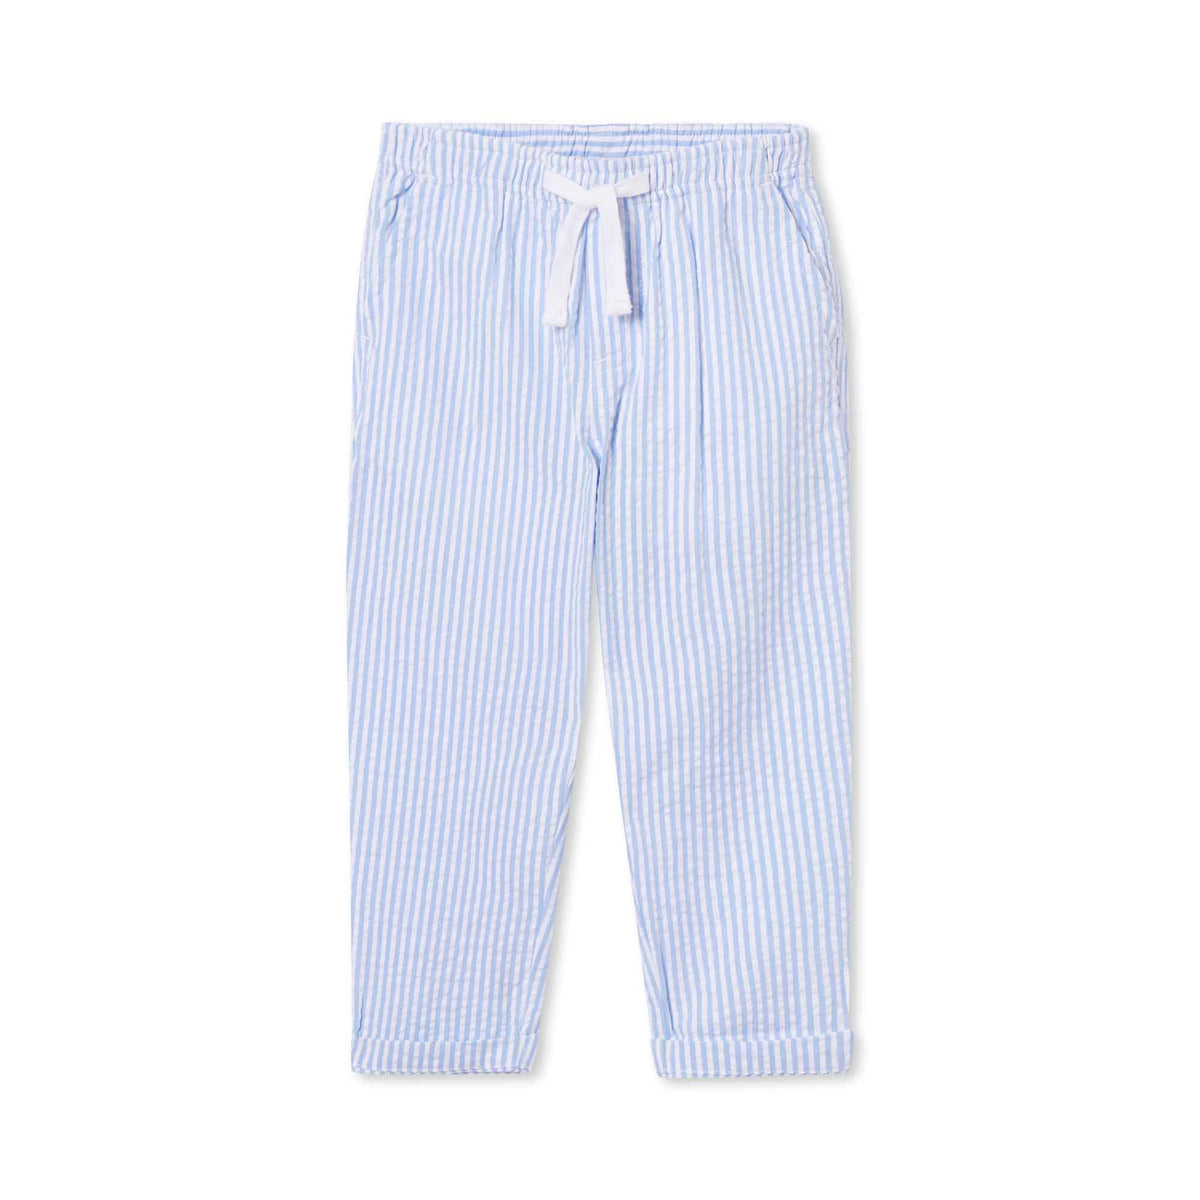 Classic and Preppy Mason Pant, Vista Blue Seersucker-Bottoms-Vista Blue Seersucker-XS (2-3T)-CPC - Classic Prep Childrenswear